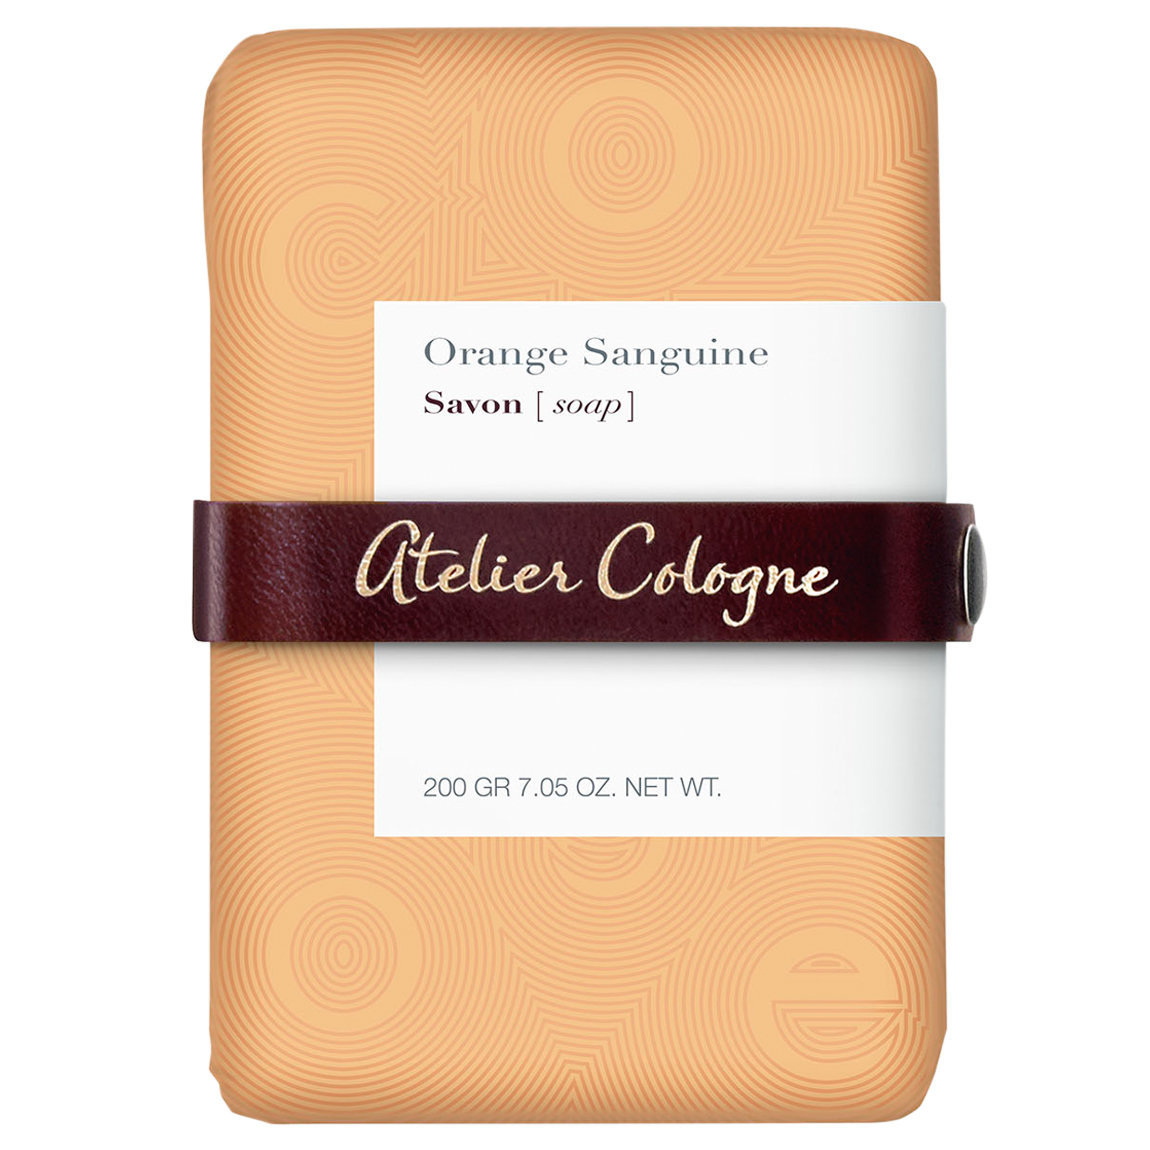 Atelier Cologne Orange Sanguine Soap alternative view 1 - product swatch.